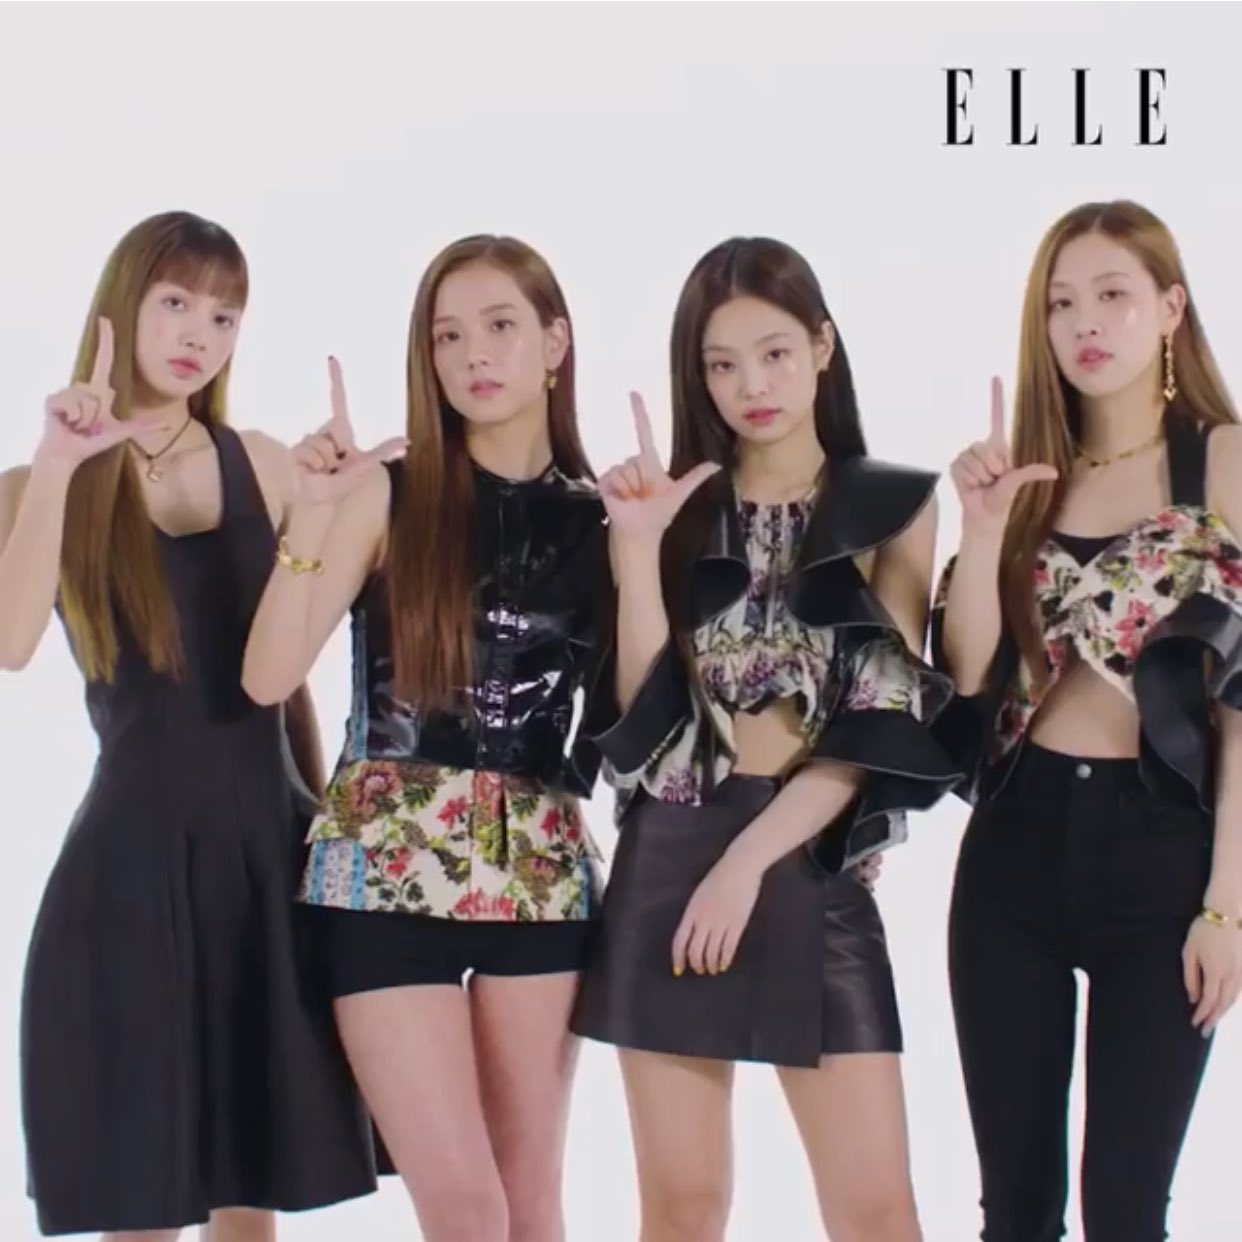 Blackpink Featured in New ELLE Korea Video for Louis Vuitton